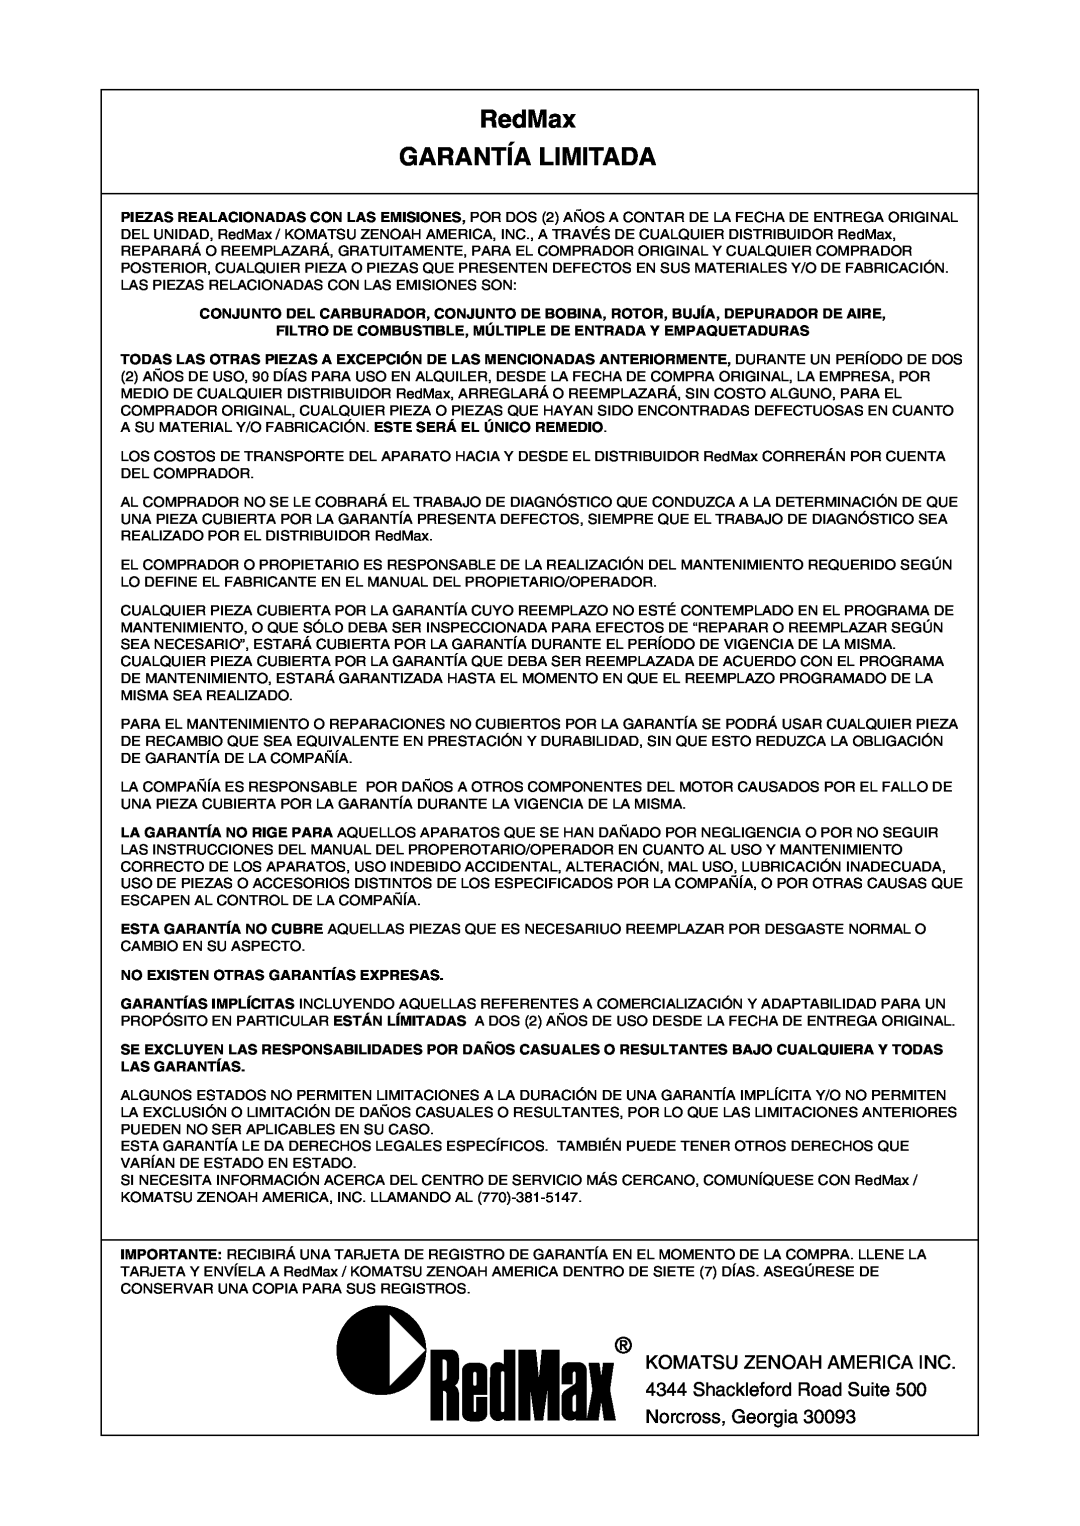 RedMax HBZ2601 manual RedMax GARANTÍA LIMITADA 